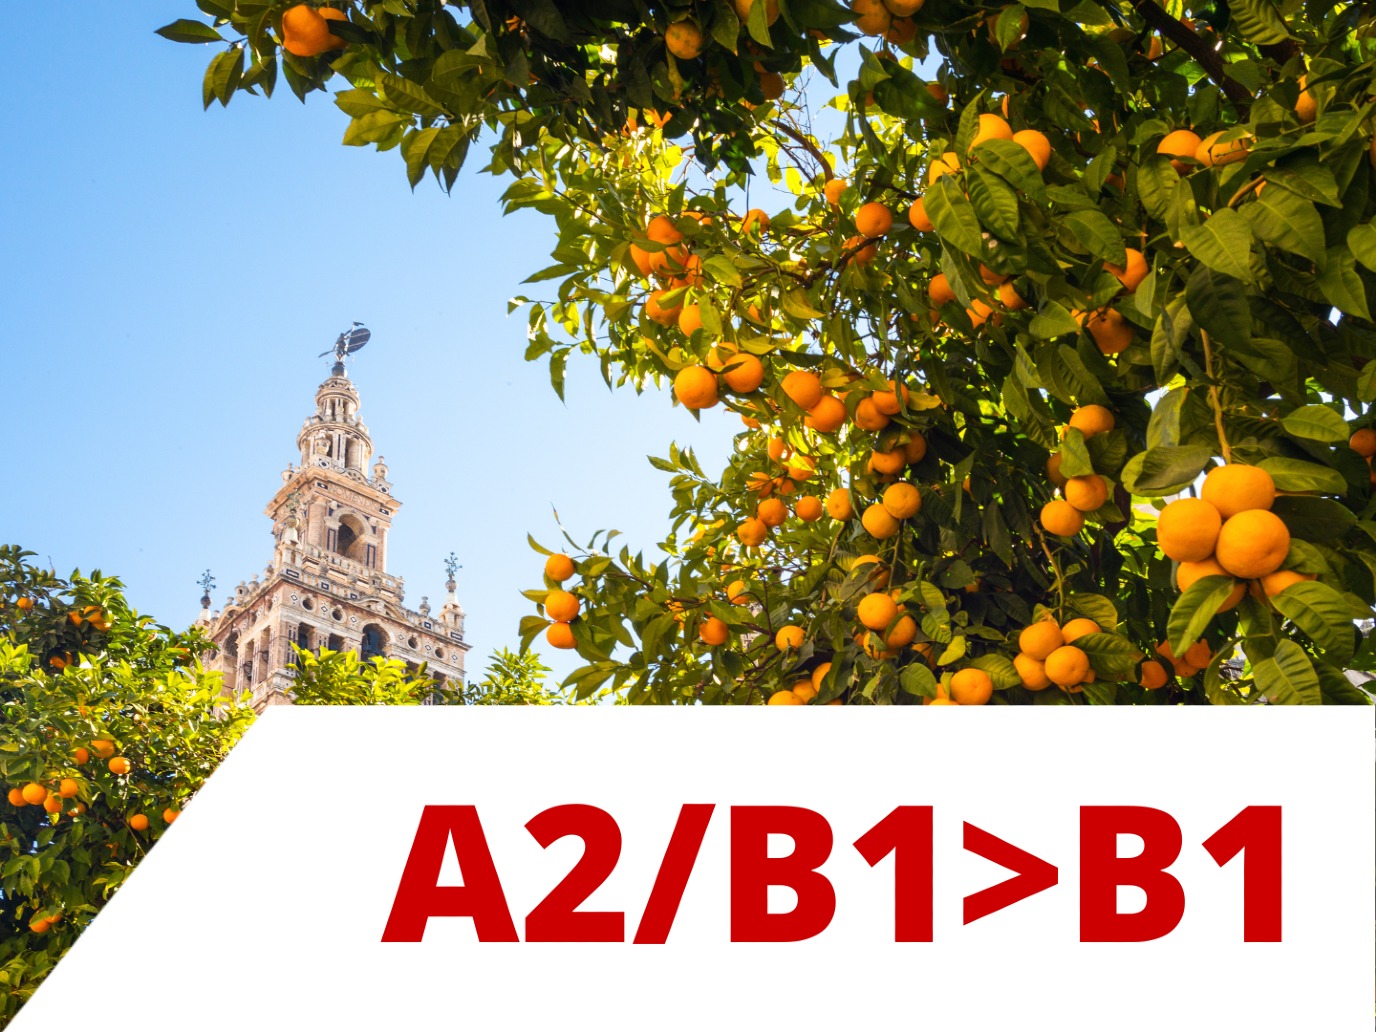 Spanish A2/B1>B1